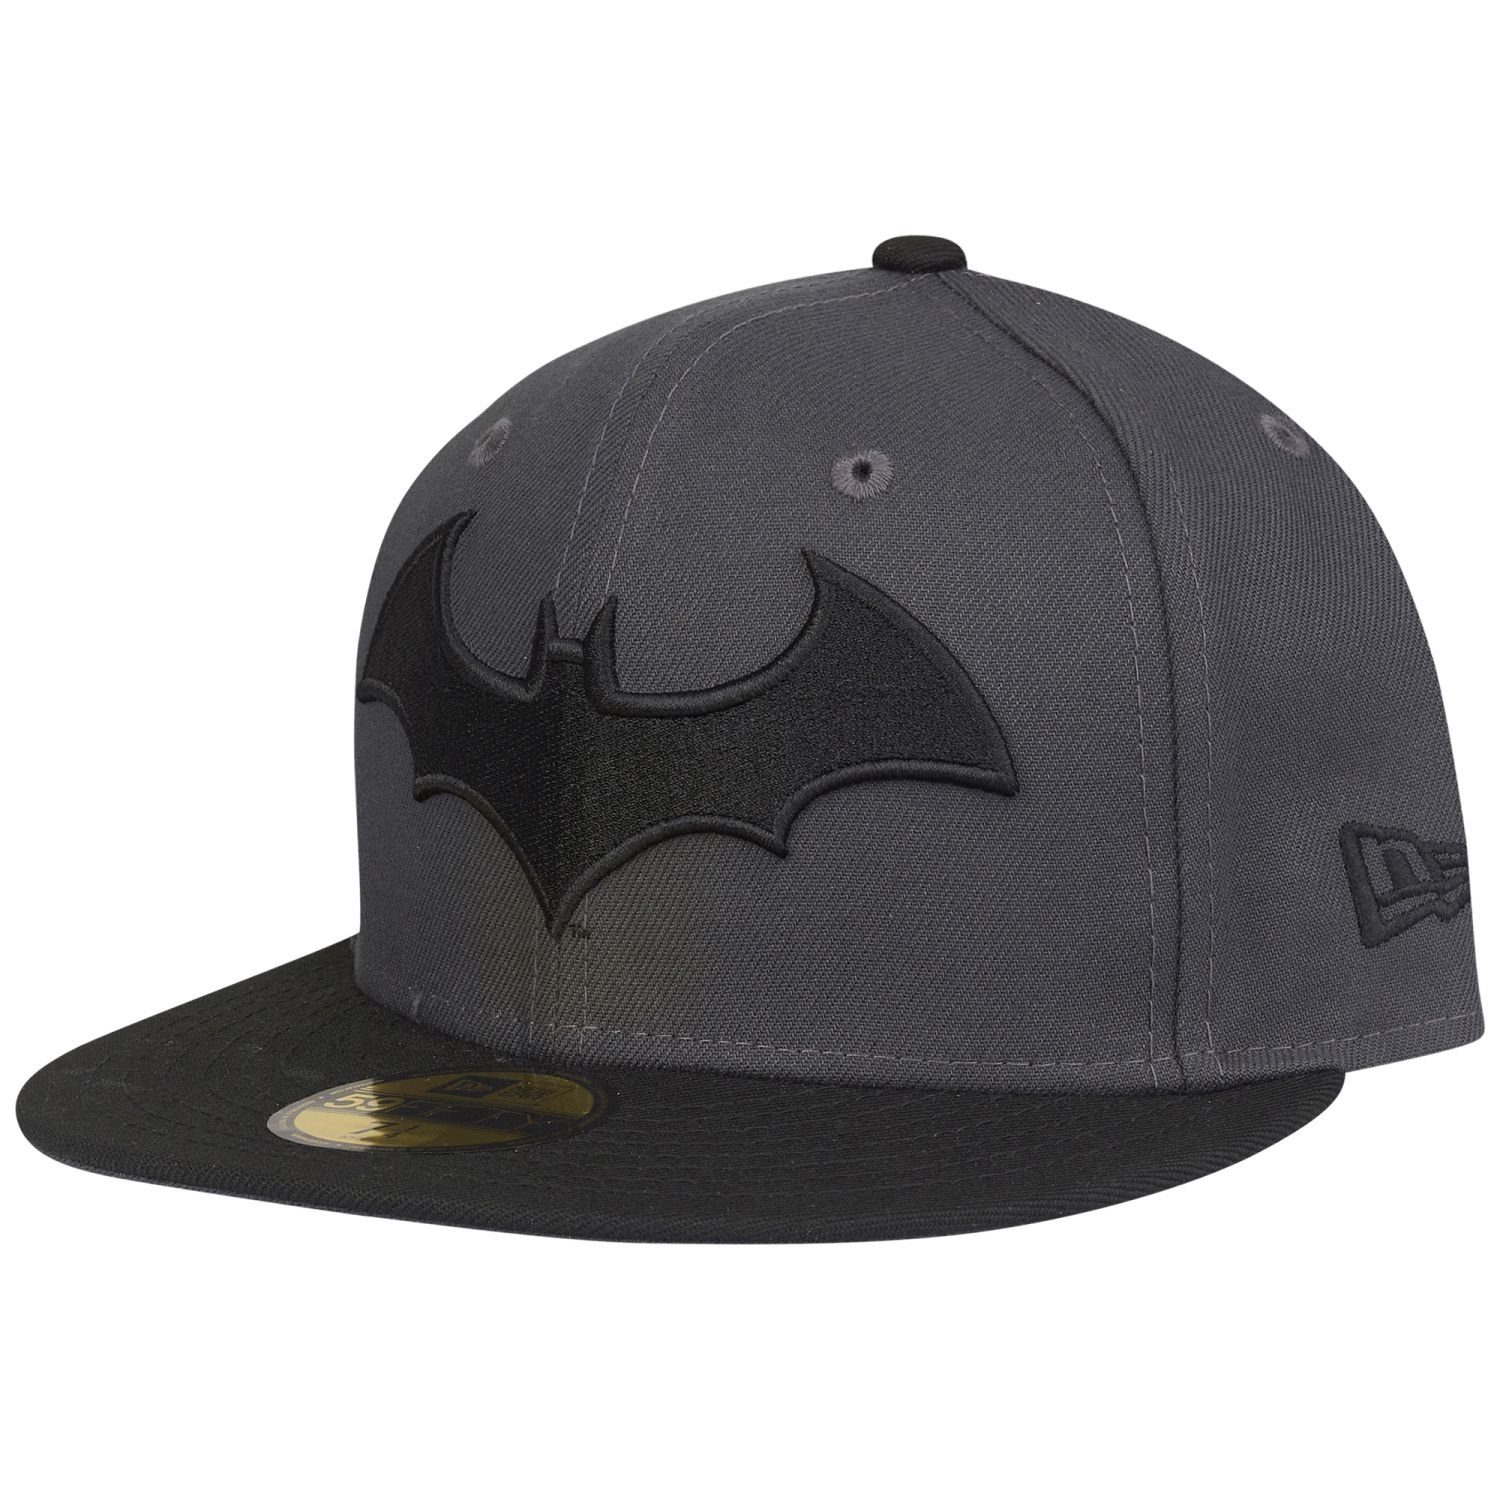 New Era Fitted Cap 59Fifty DC Batman